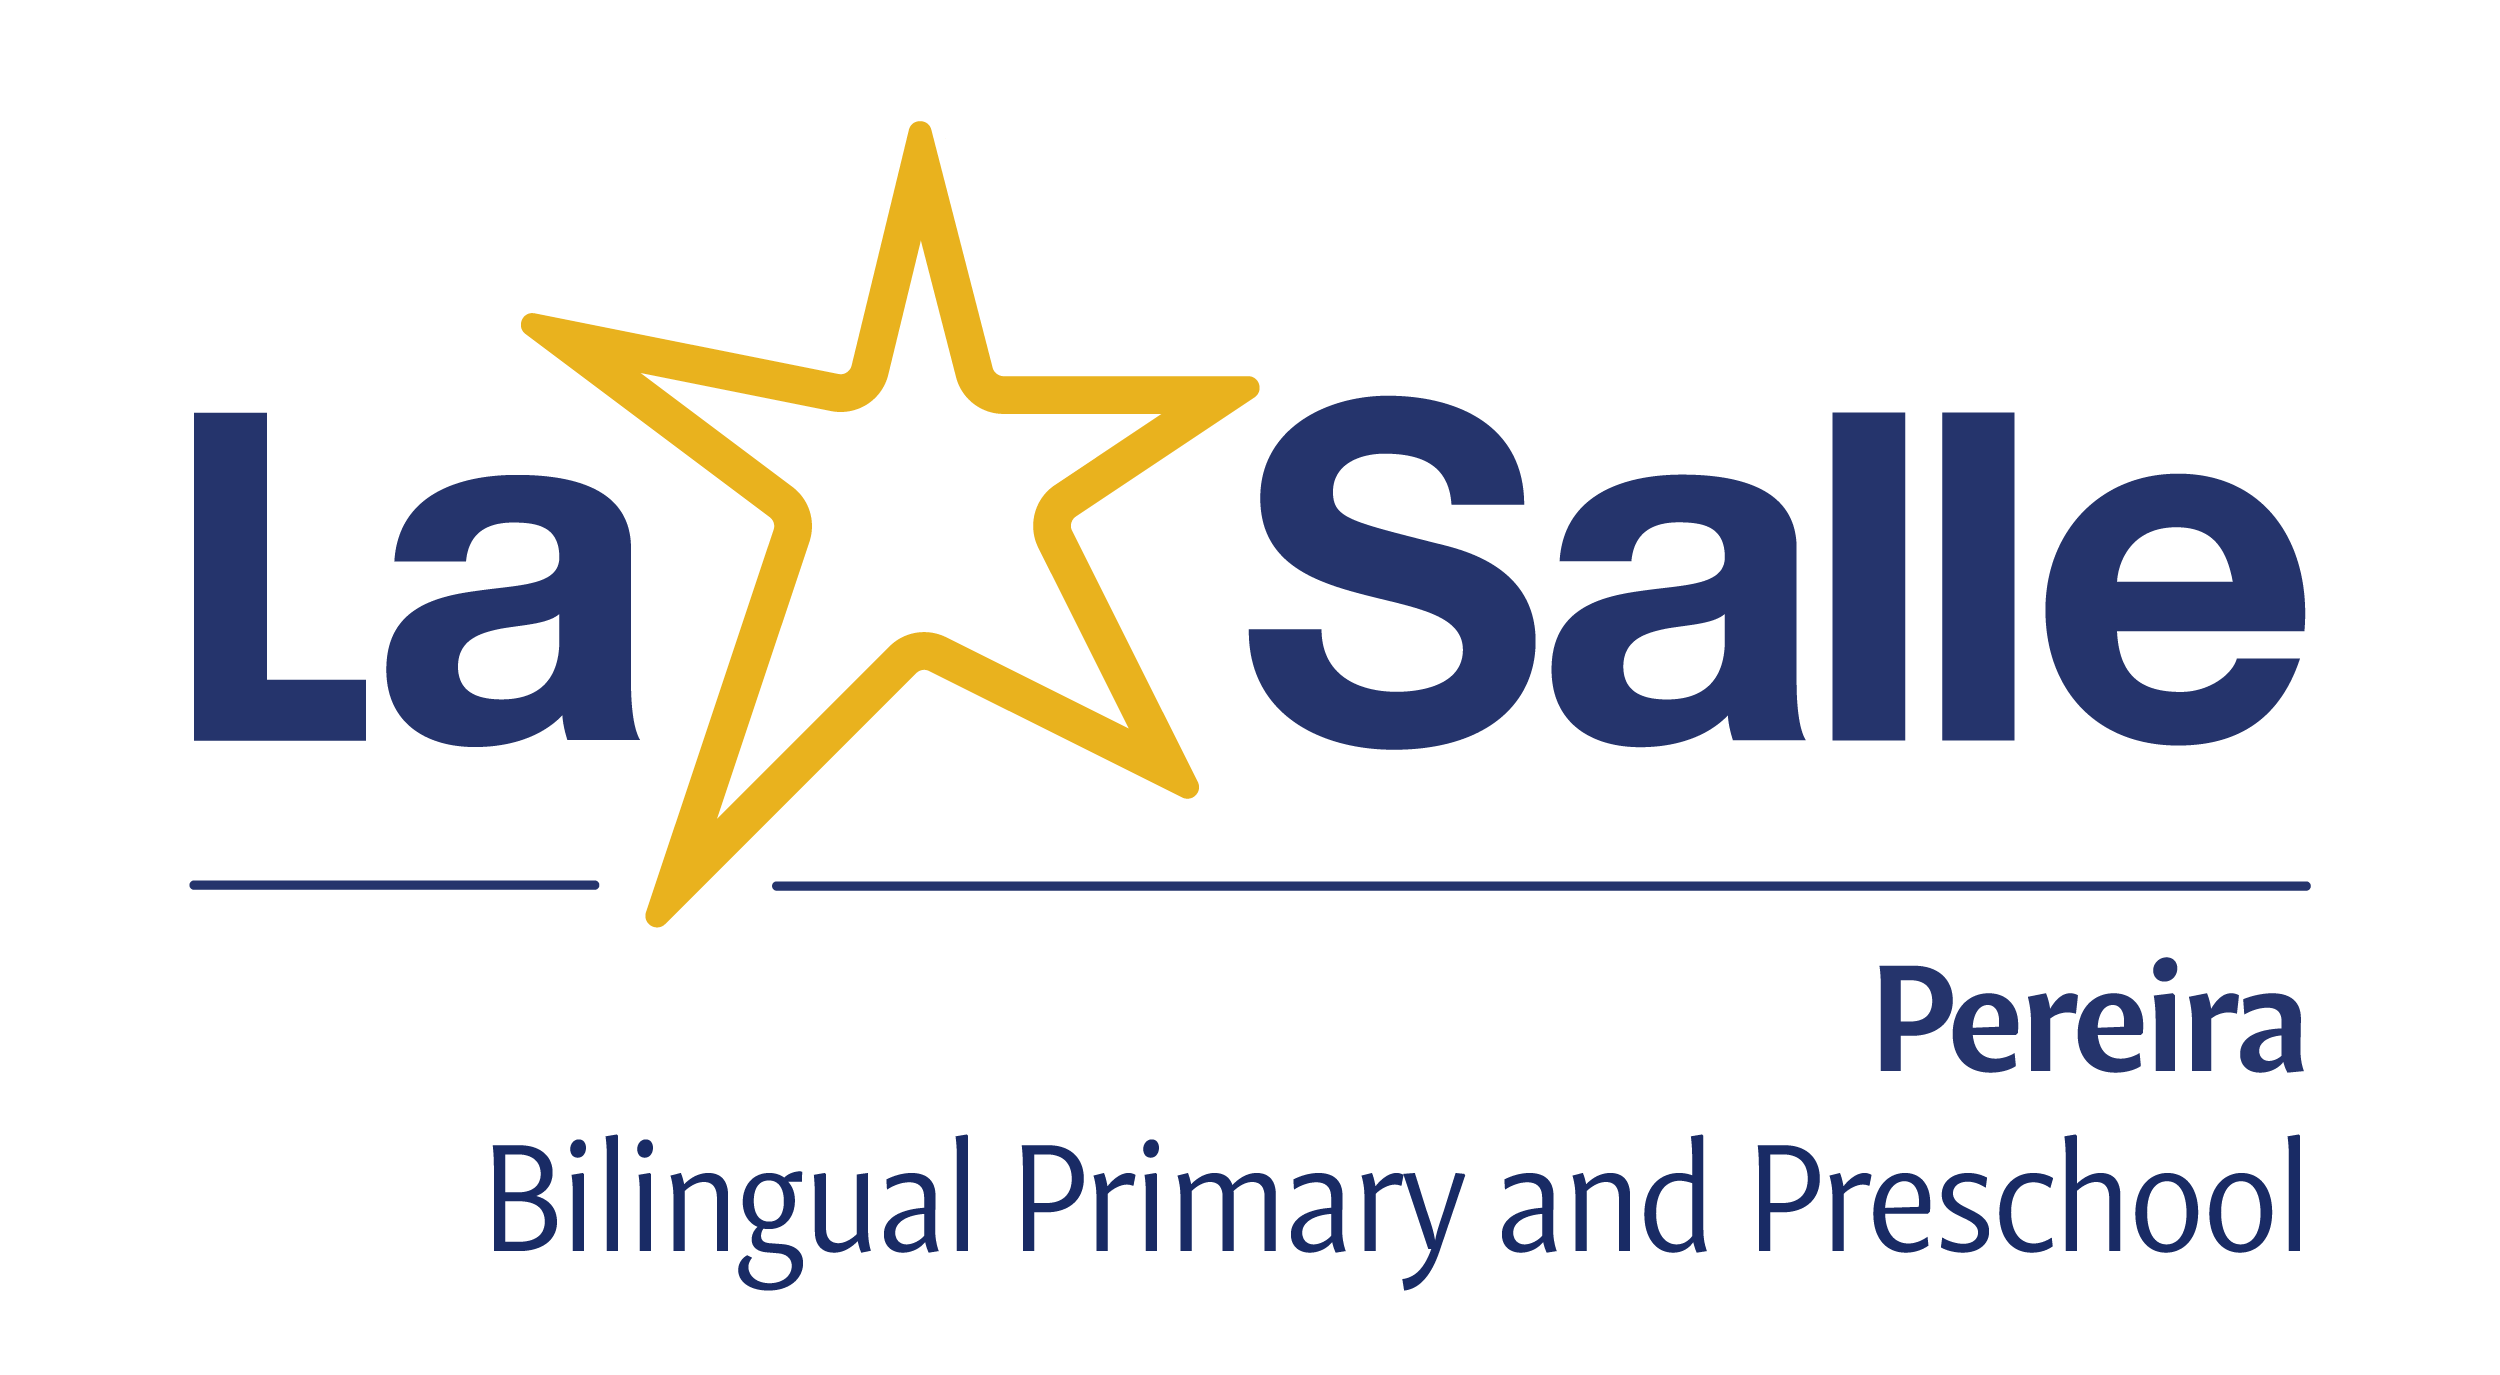 Pereira Bilingual Primary and Preschool 01